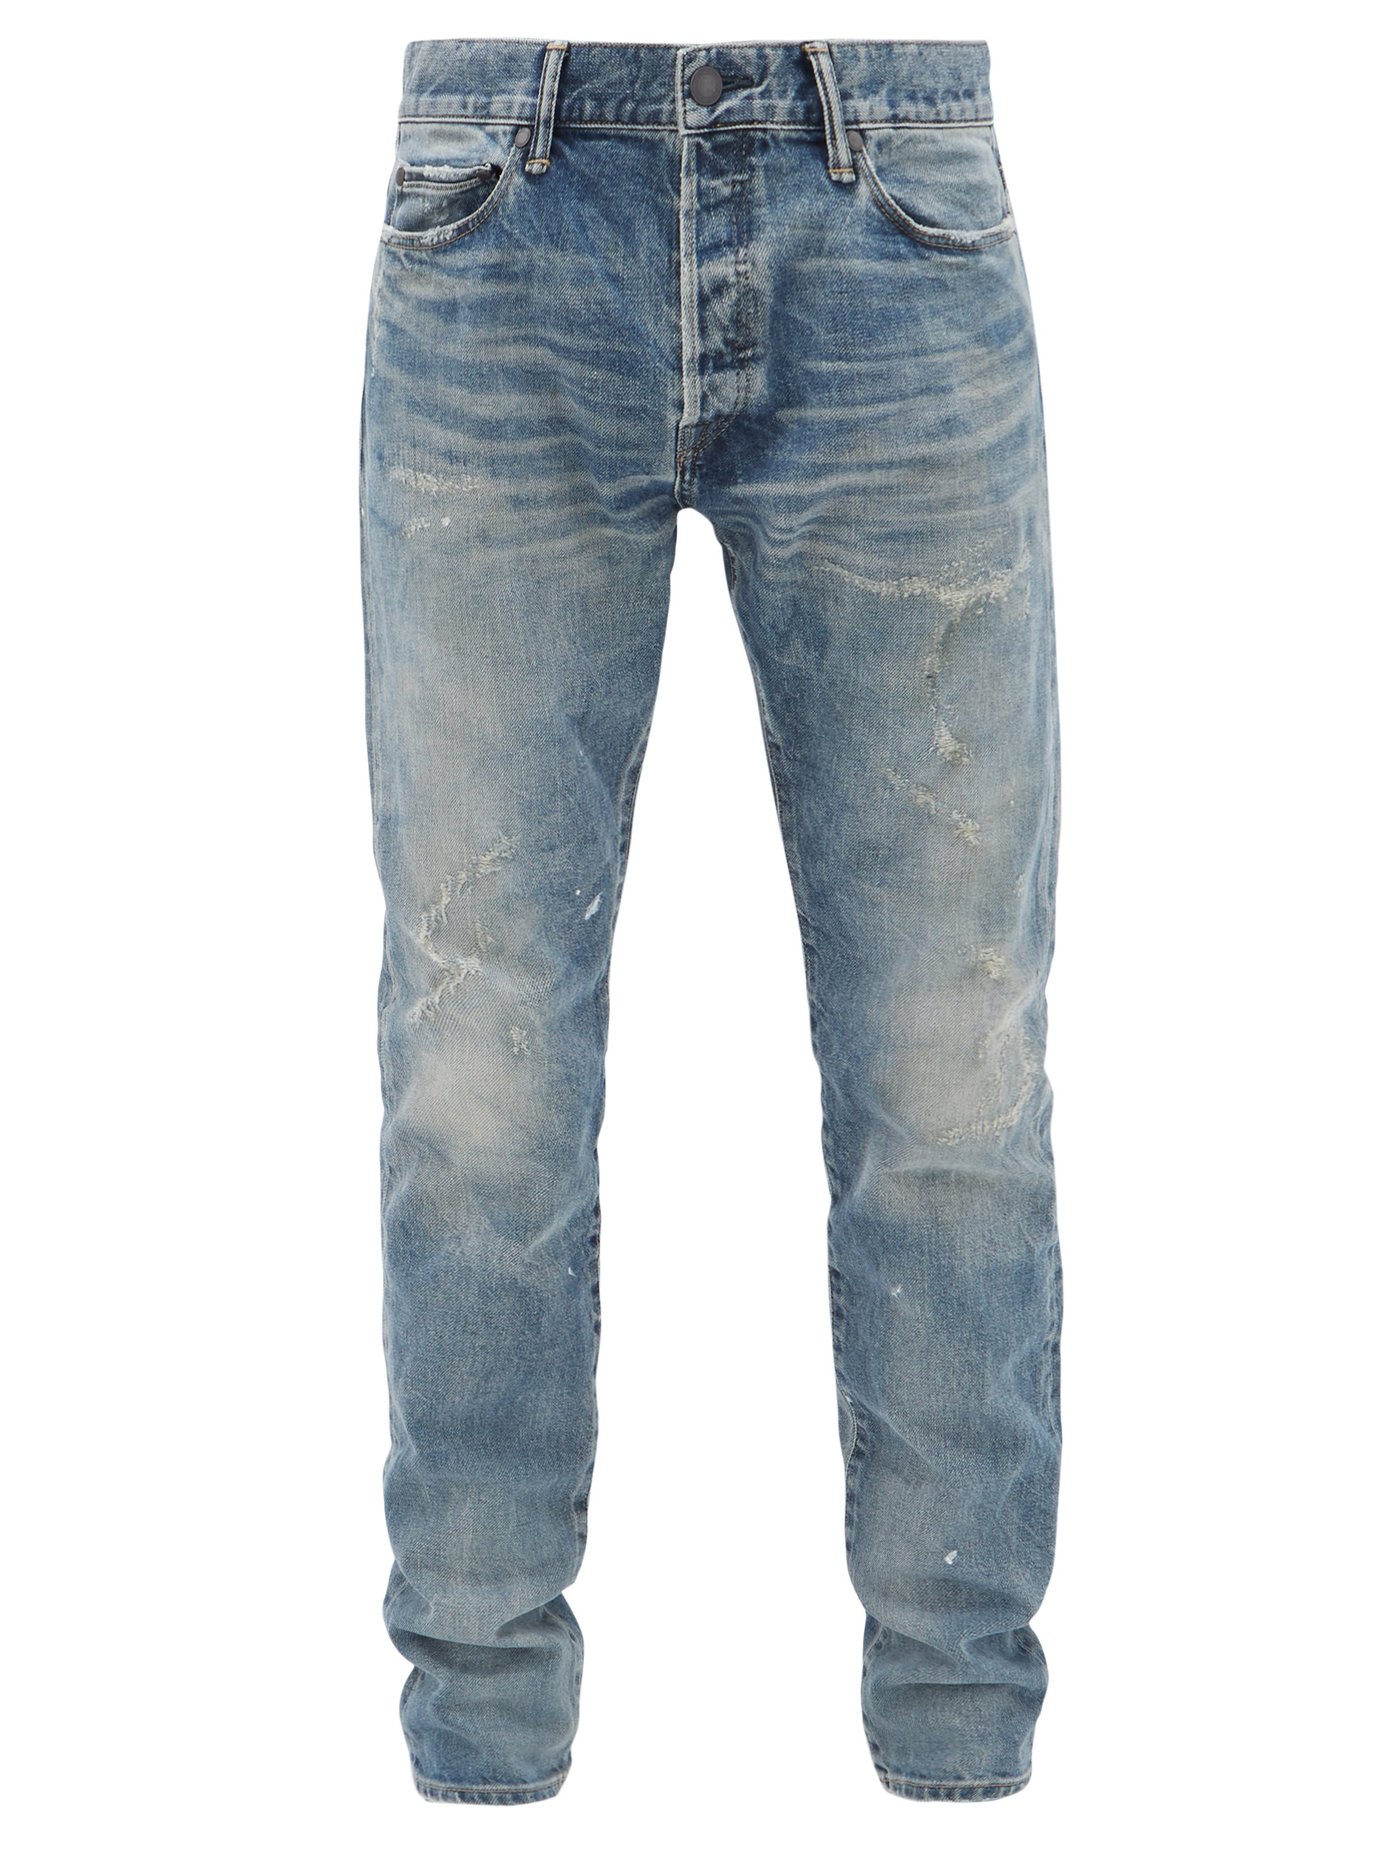 grey cast jeans